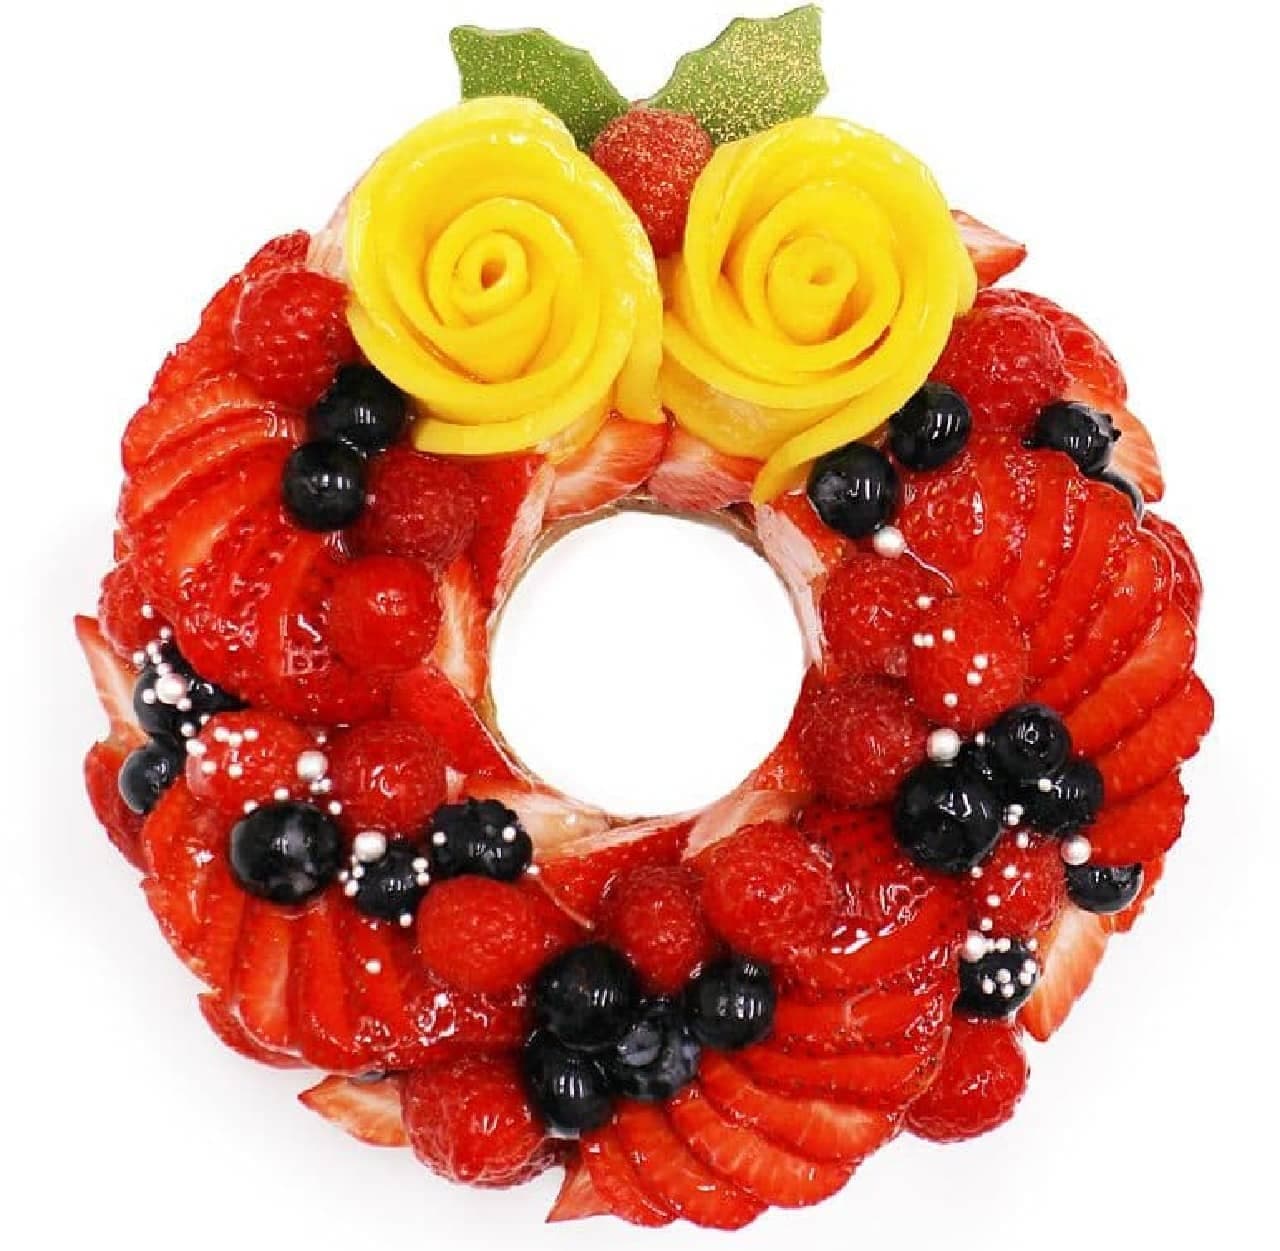 Cafe Comsa "Berry and Mango Wreath Cake"